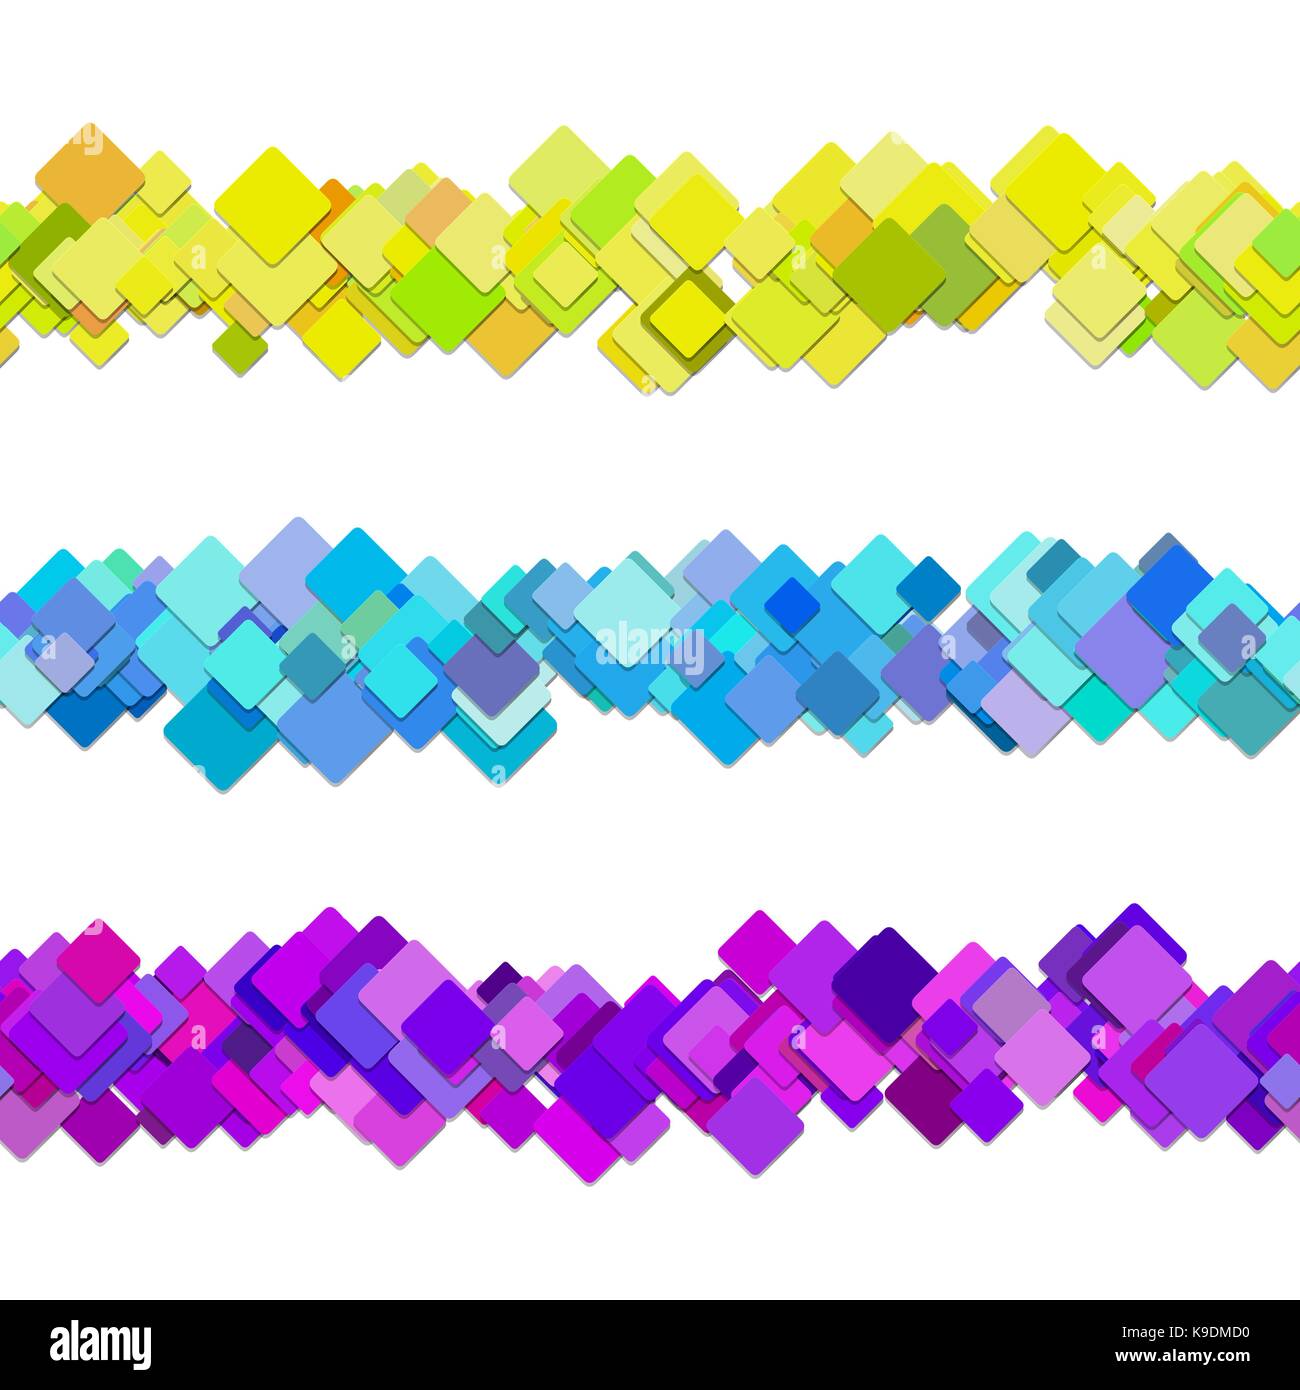 Wiederholbare quadratischen Muster Absatz Regel Line Design Set - vektorgrafik Elemente aus farbigen diagonal abgerundeten Quadraten Stock Vektor